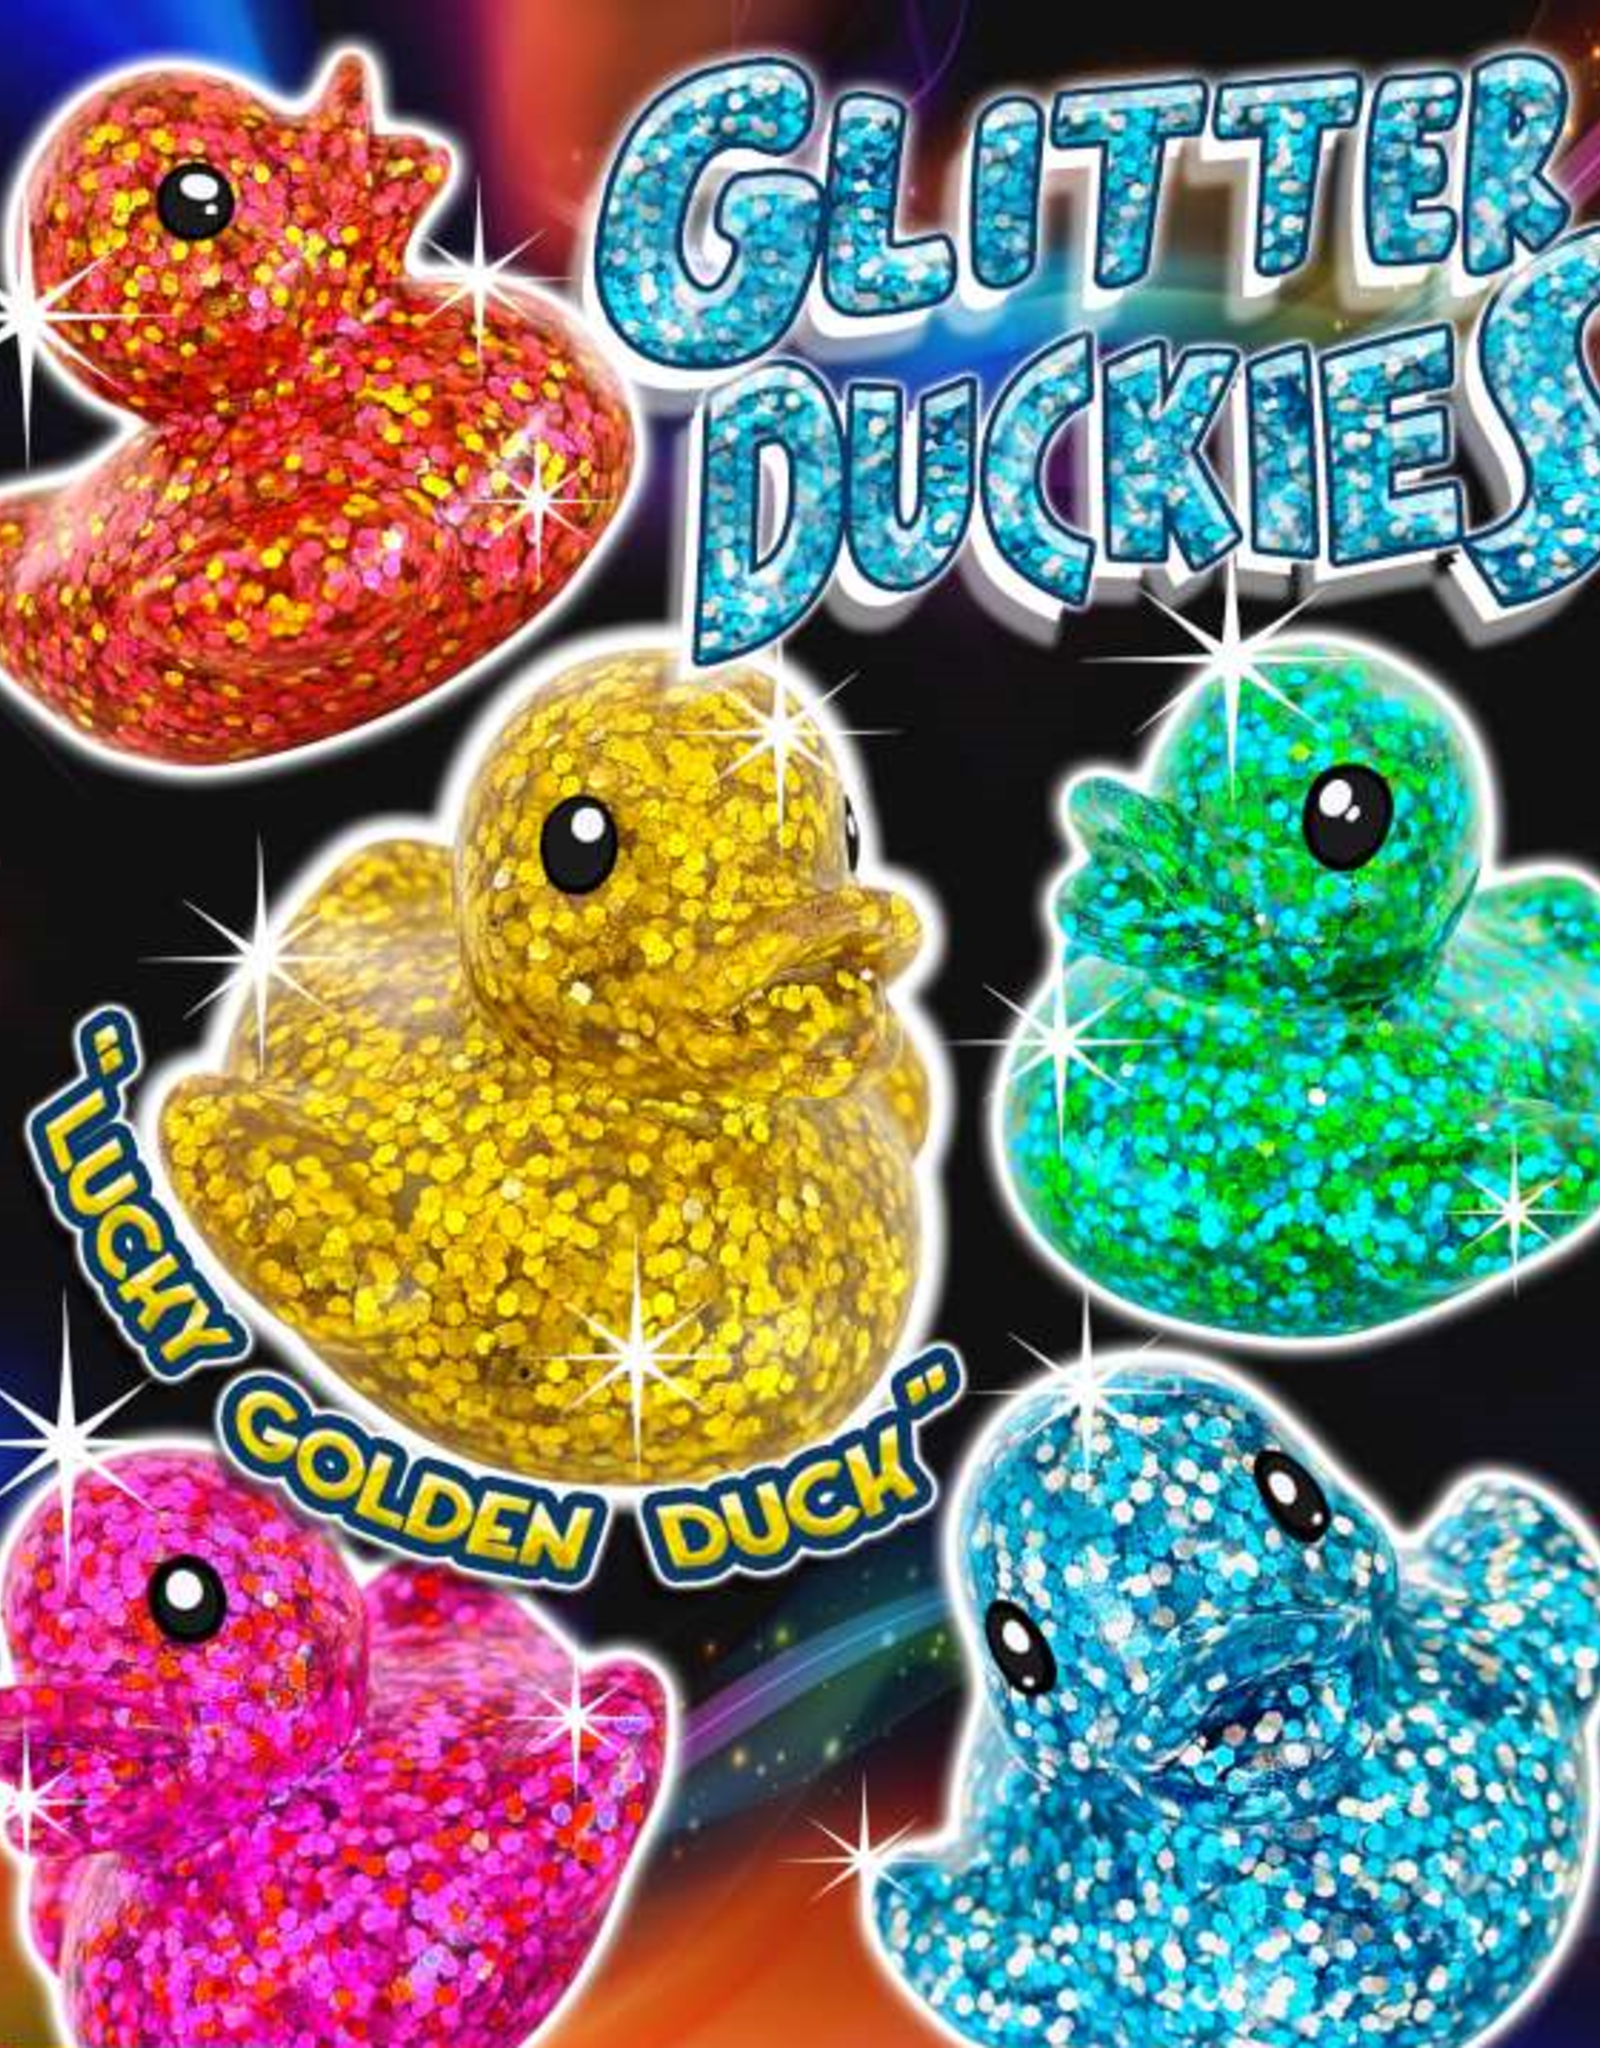 Glitter duckies